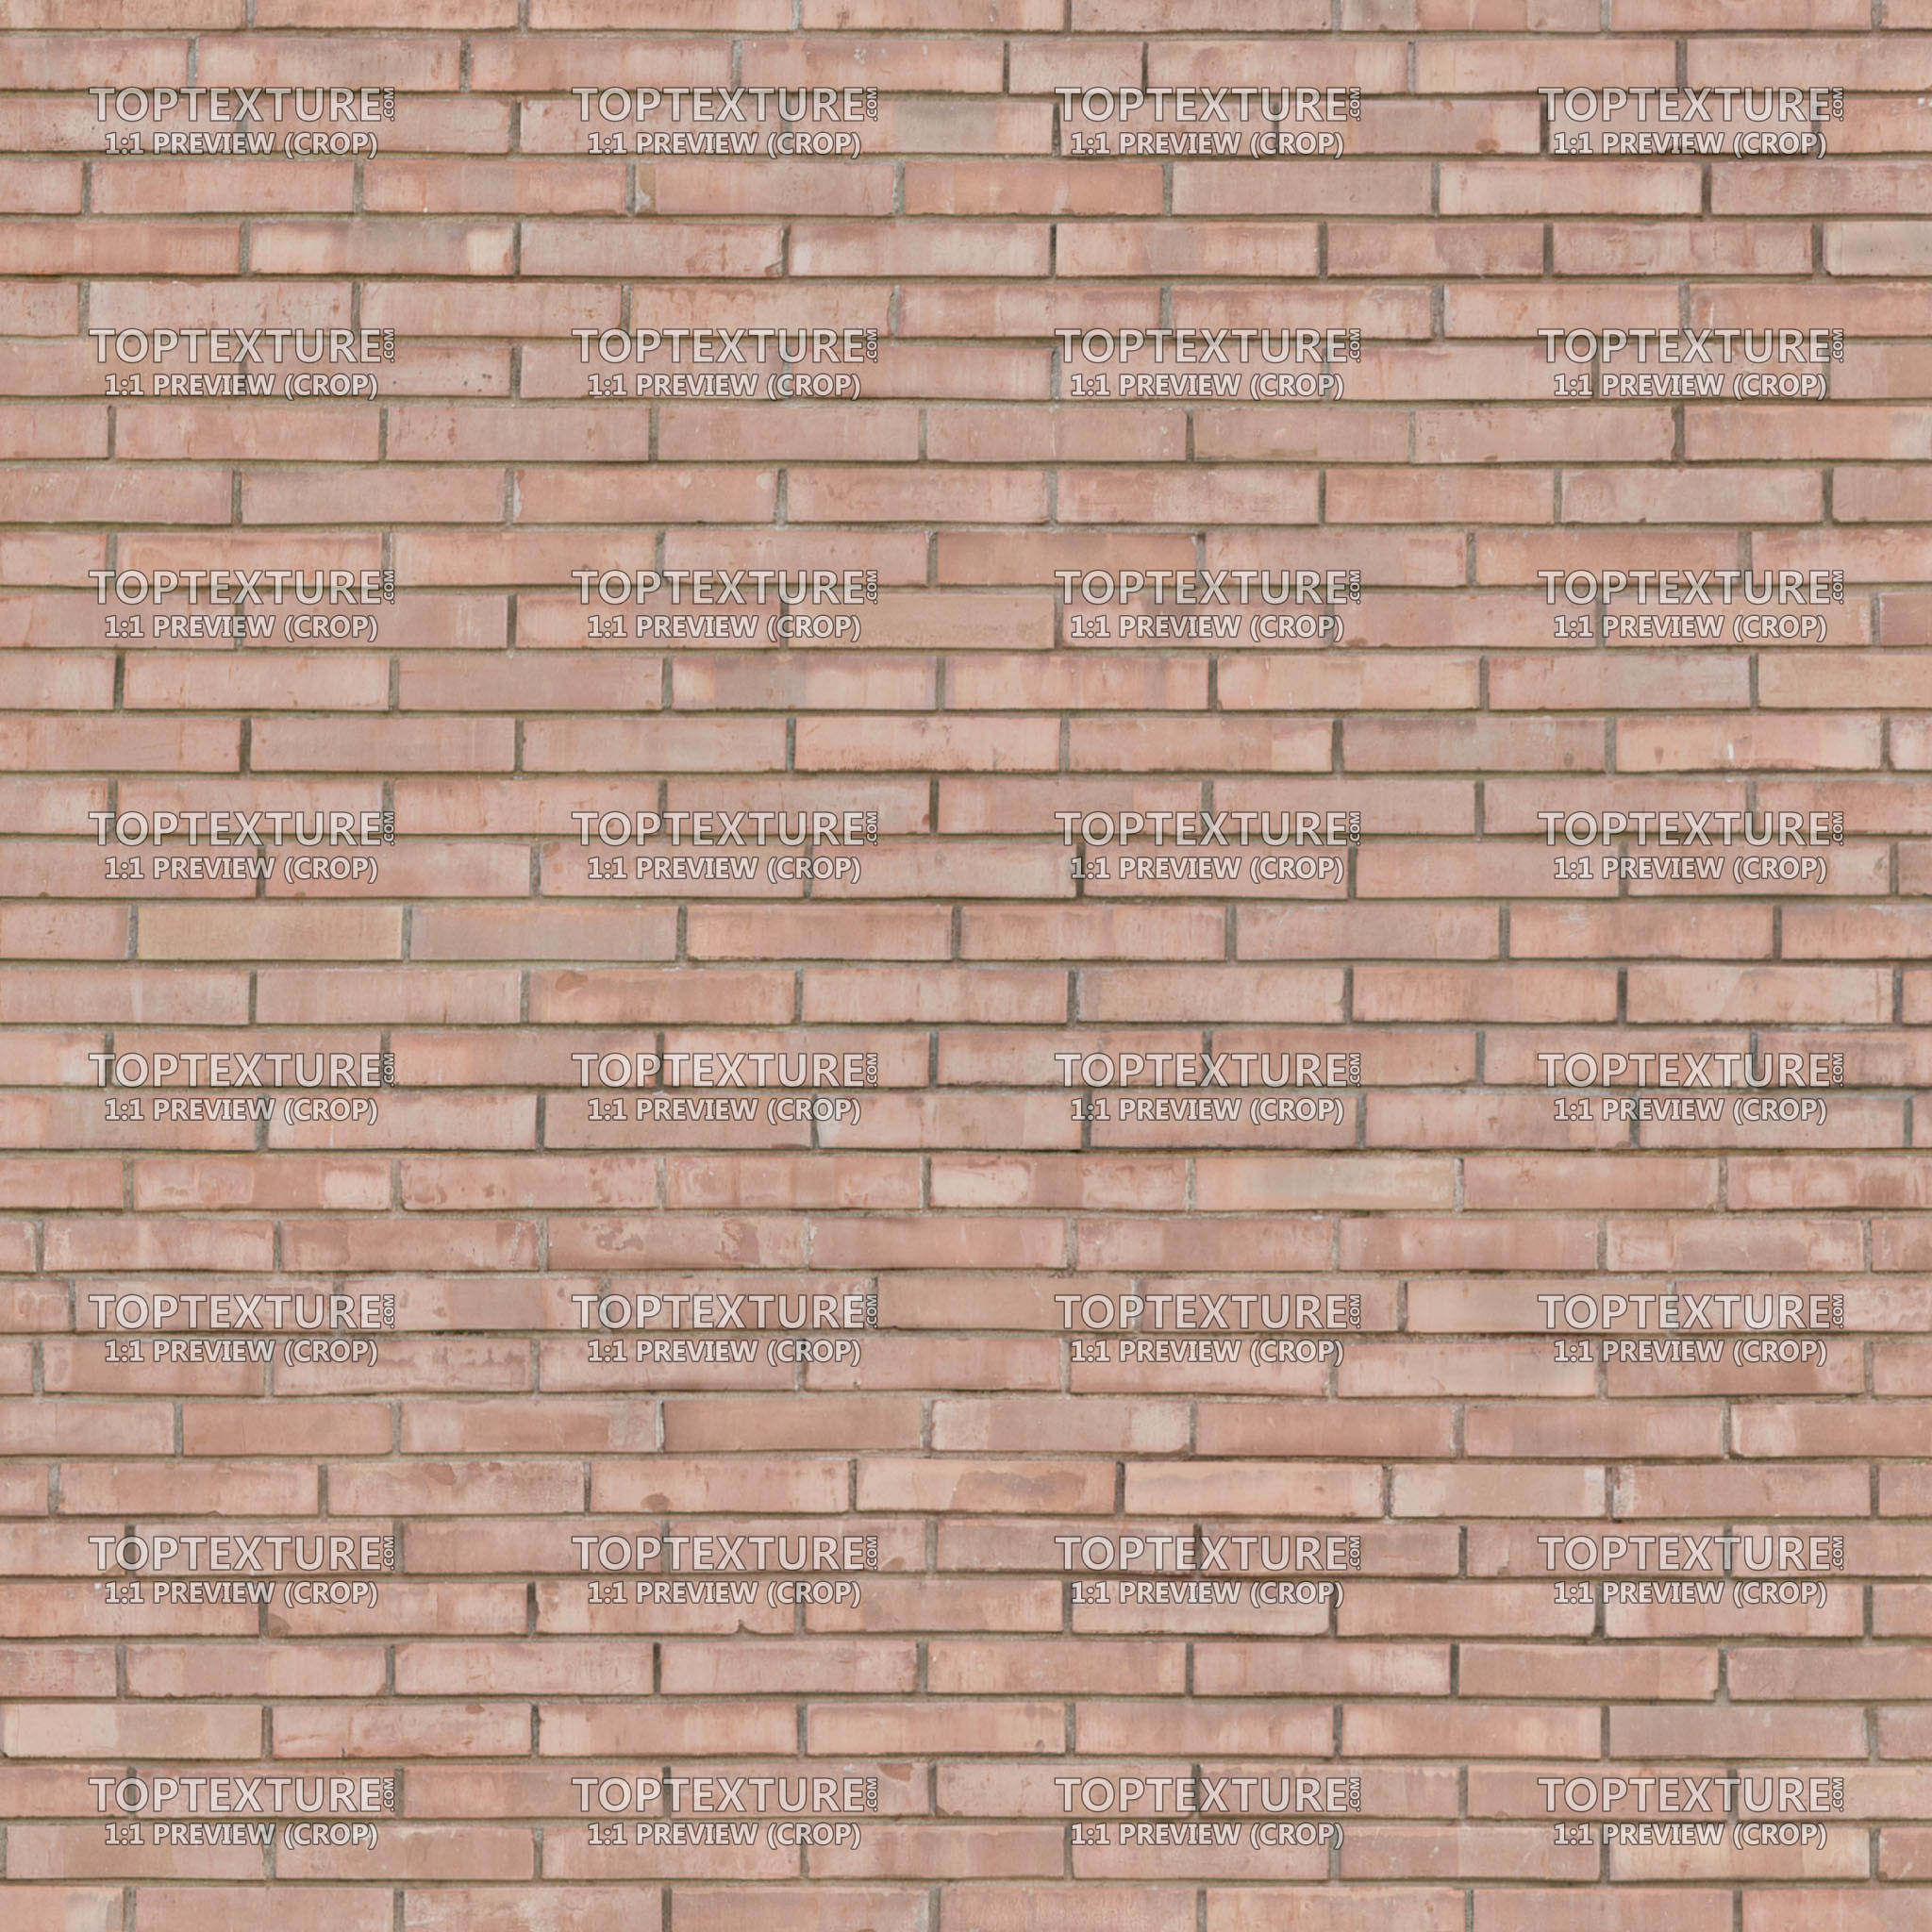 Mostly Clean Wall Bricks - 100% zoom